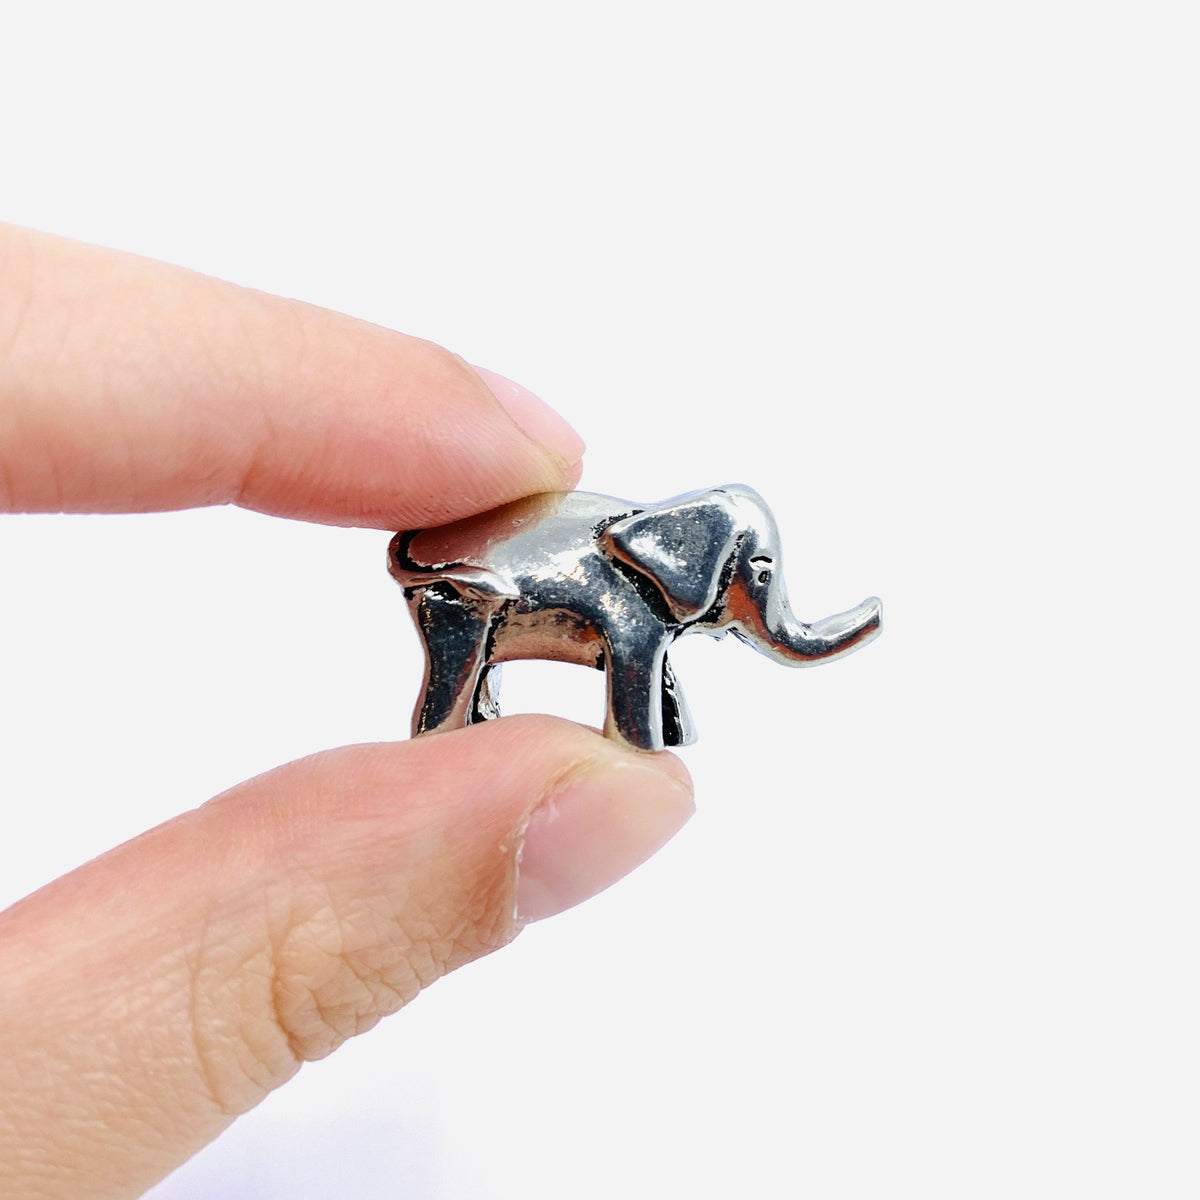 Miniature Pewter Figurine, Elephant Basic Spirit 